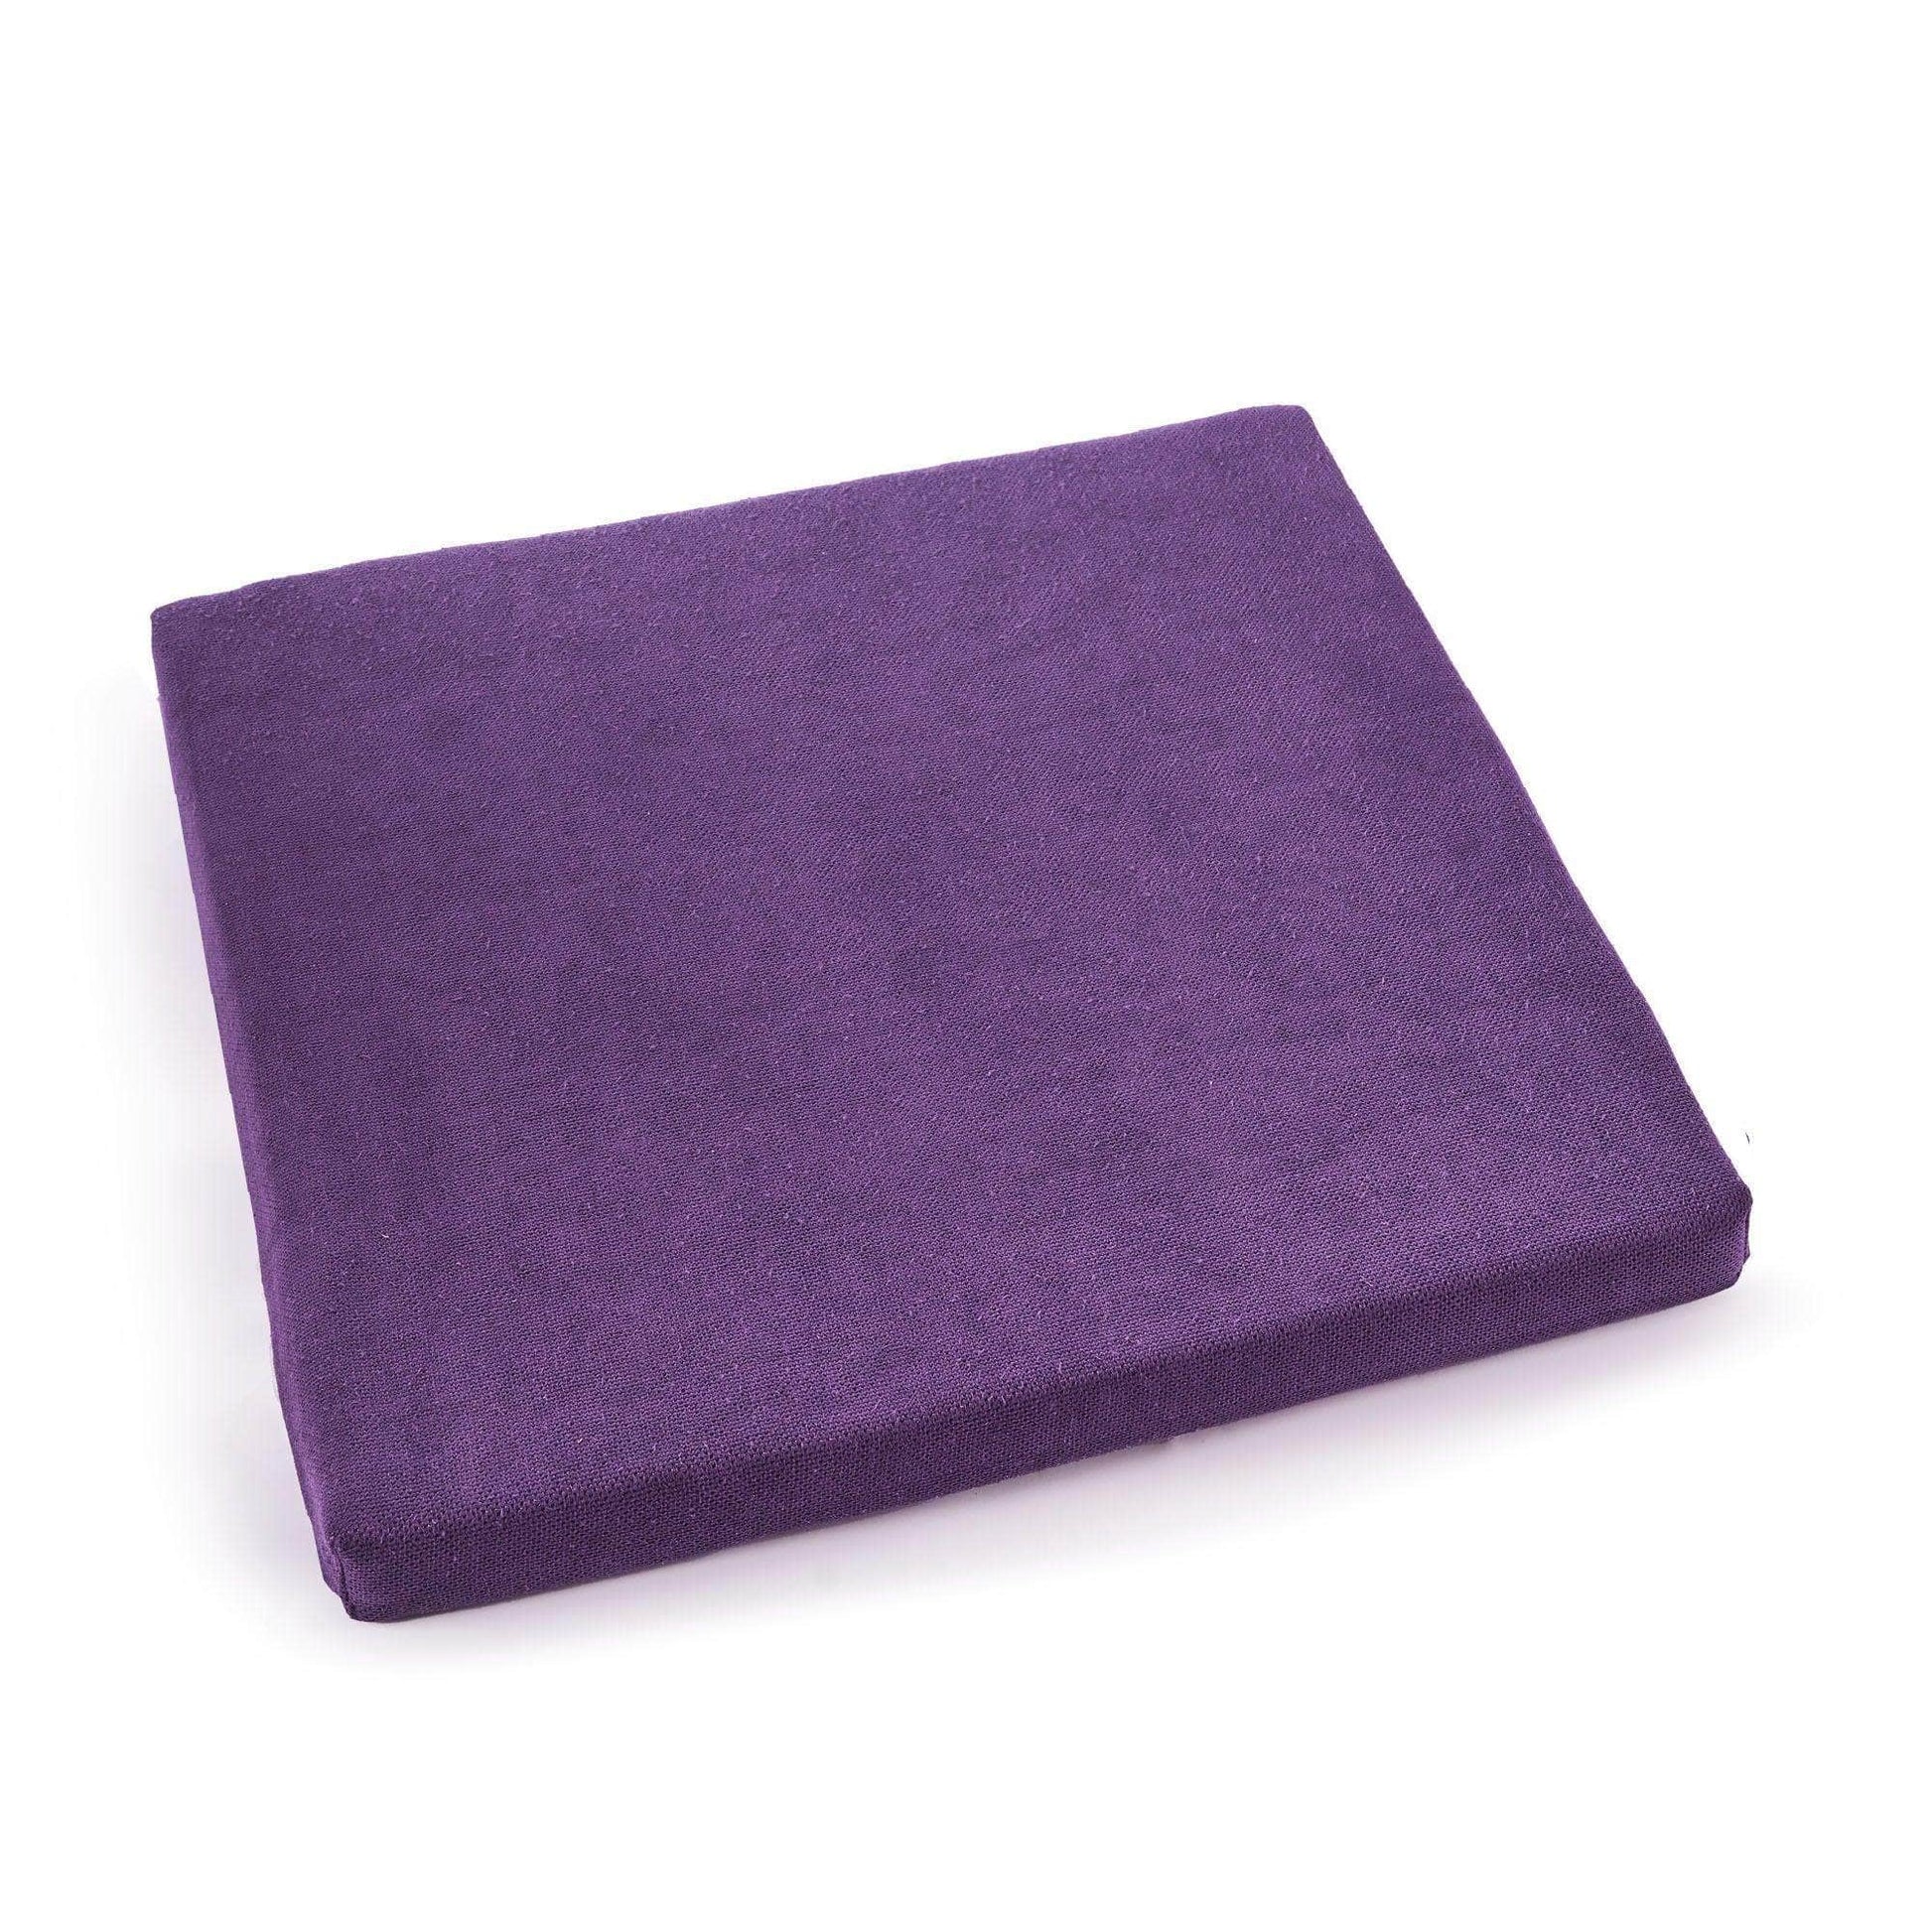 Penguin Group Cushions Mauve Square Sponge Cushion 50×52×4 cm